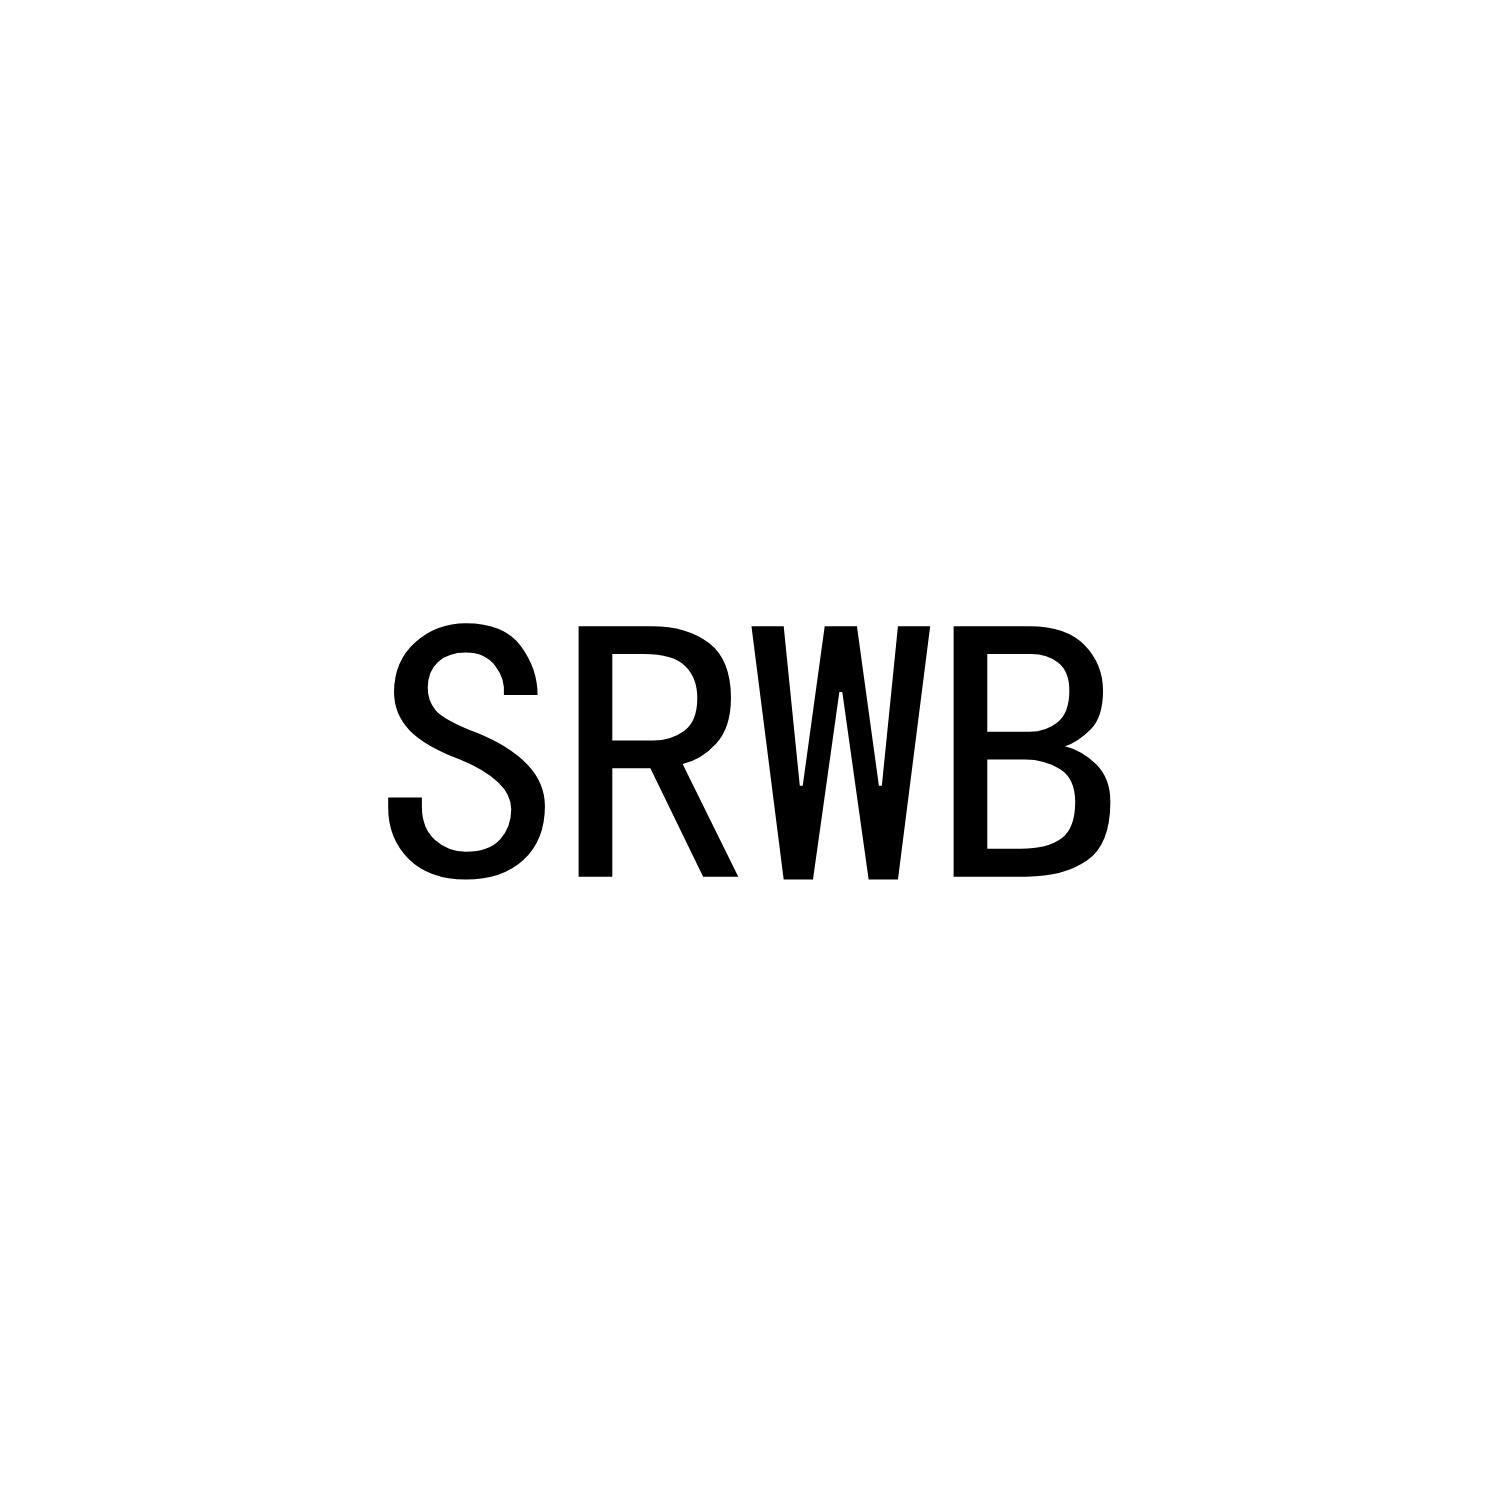 SRWB